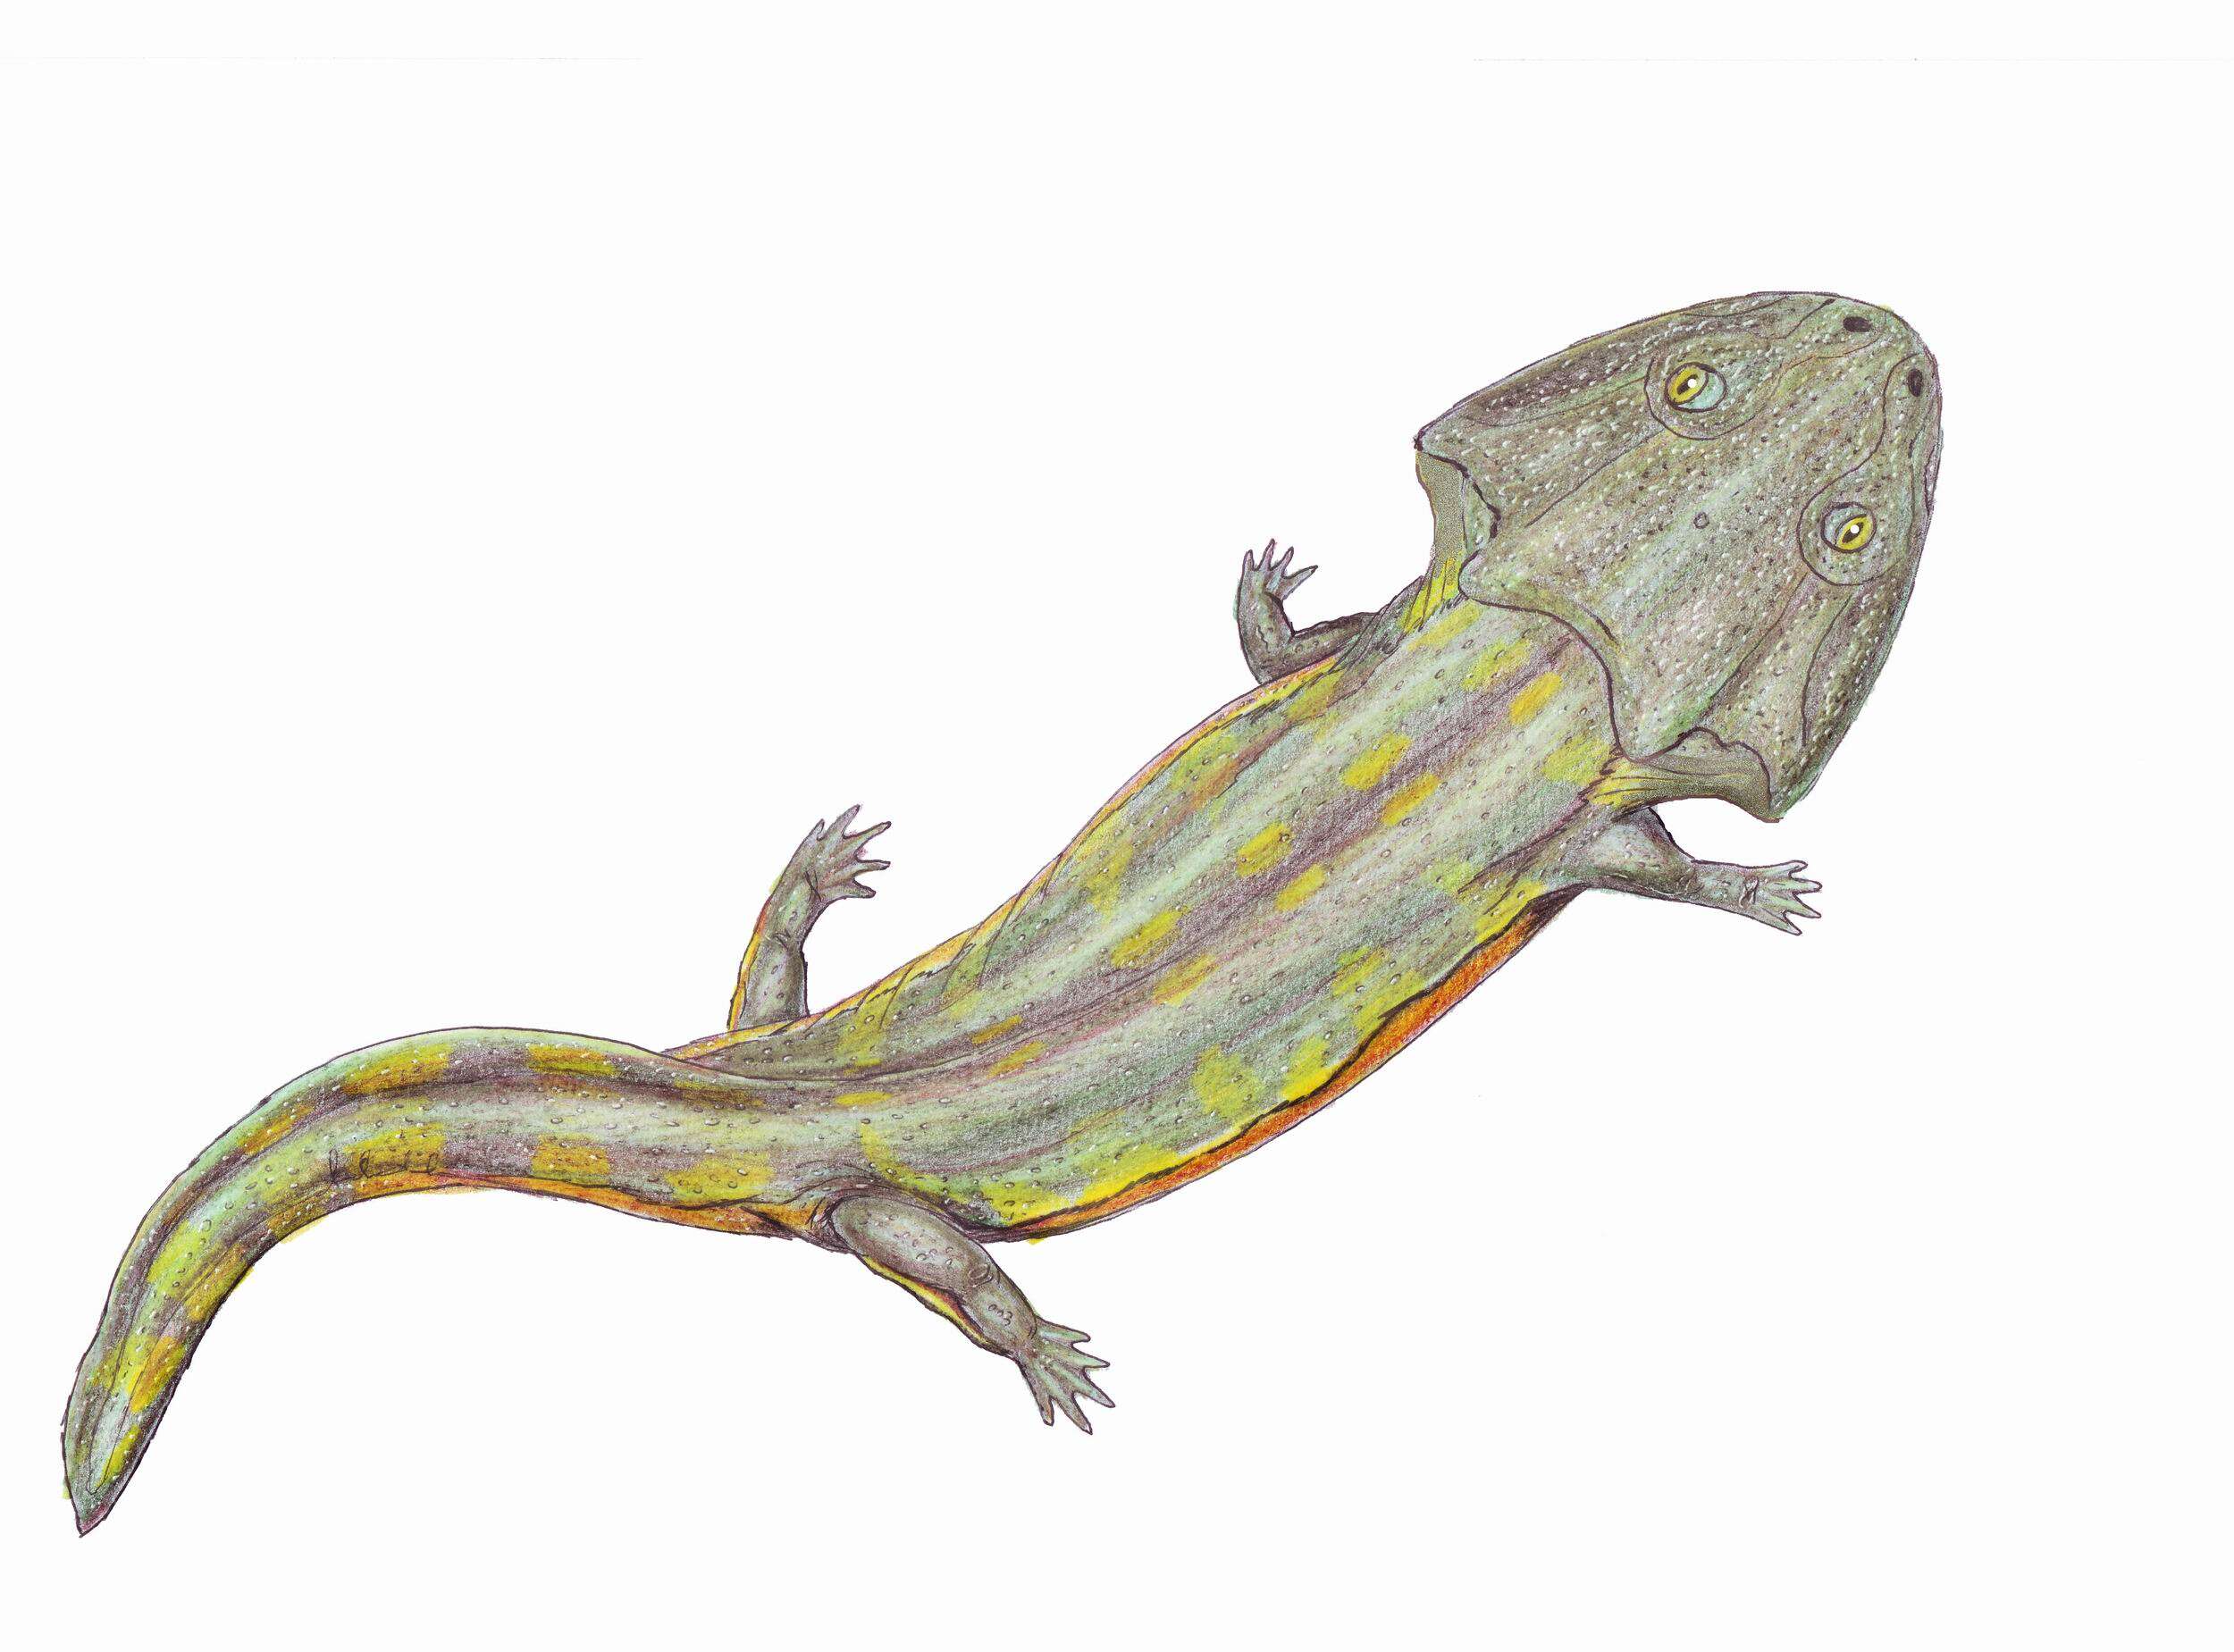 Image of Chigutisauridae